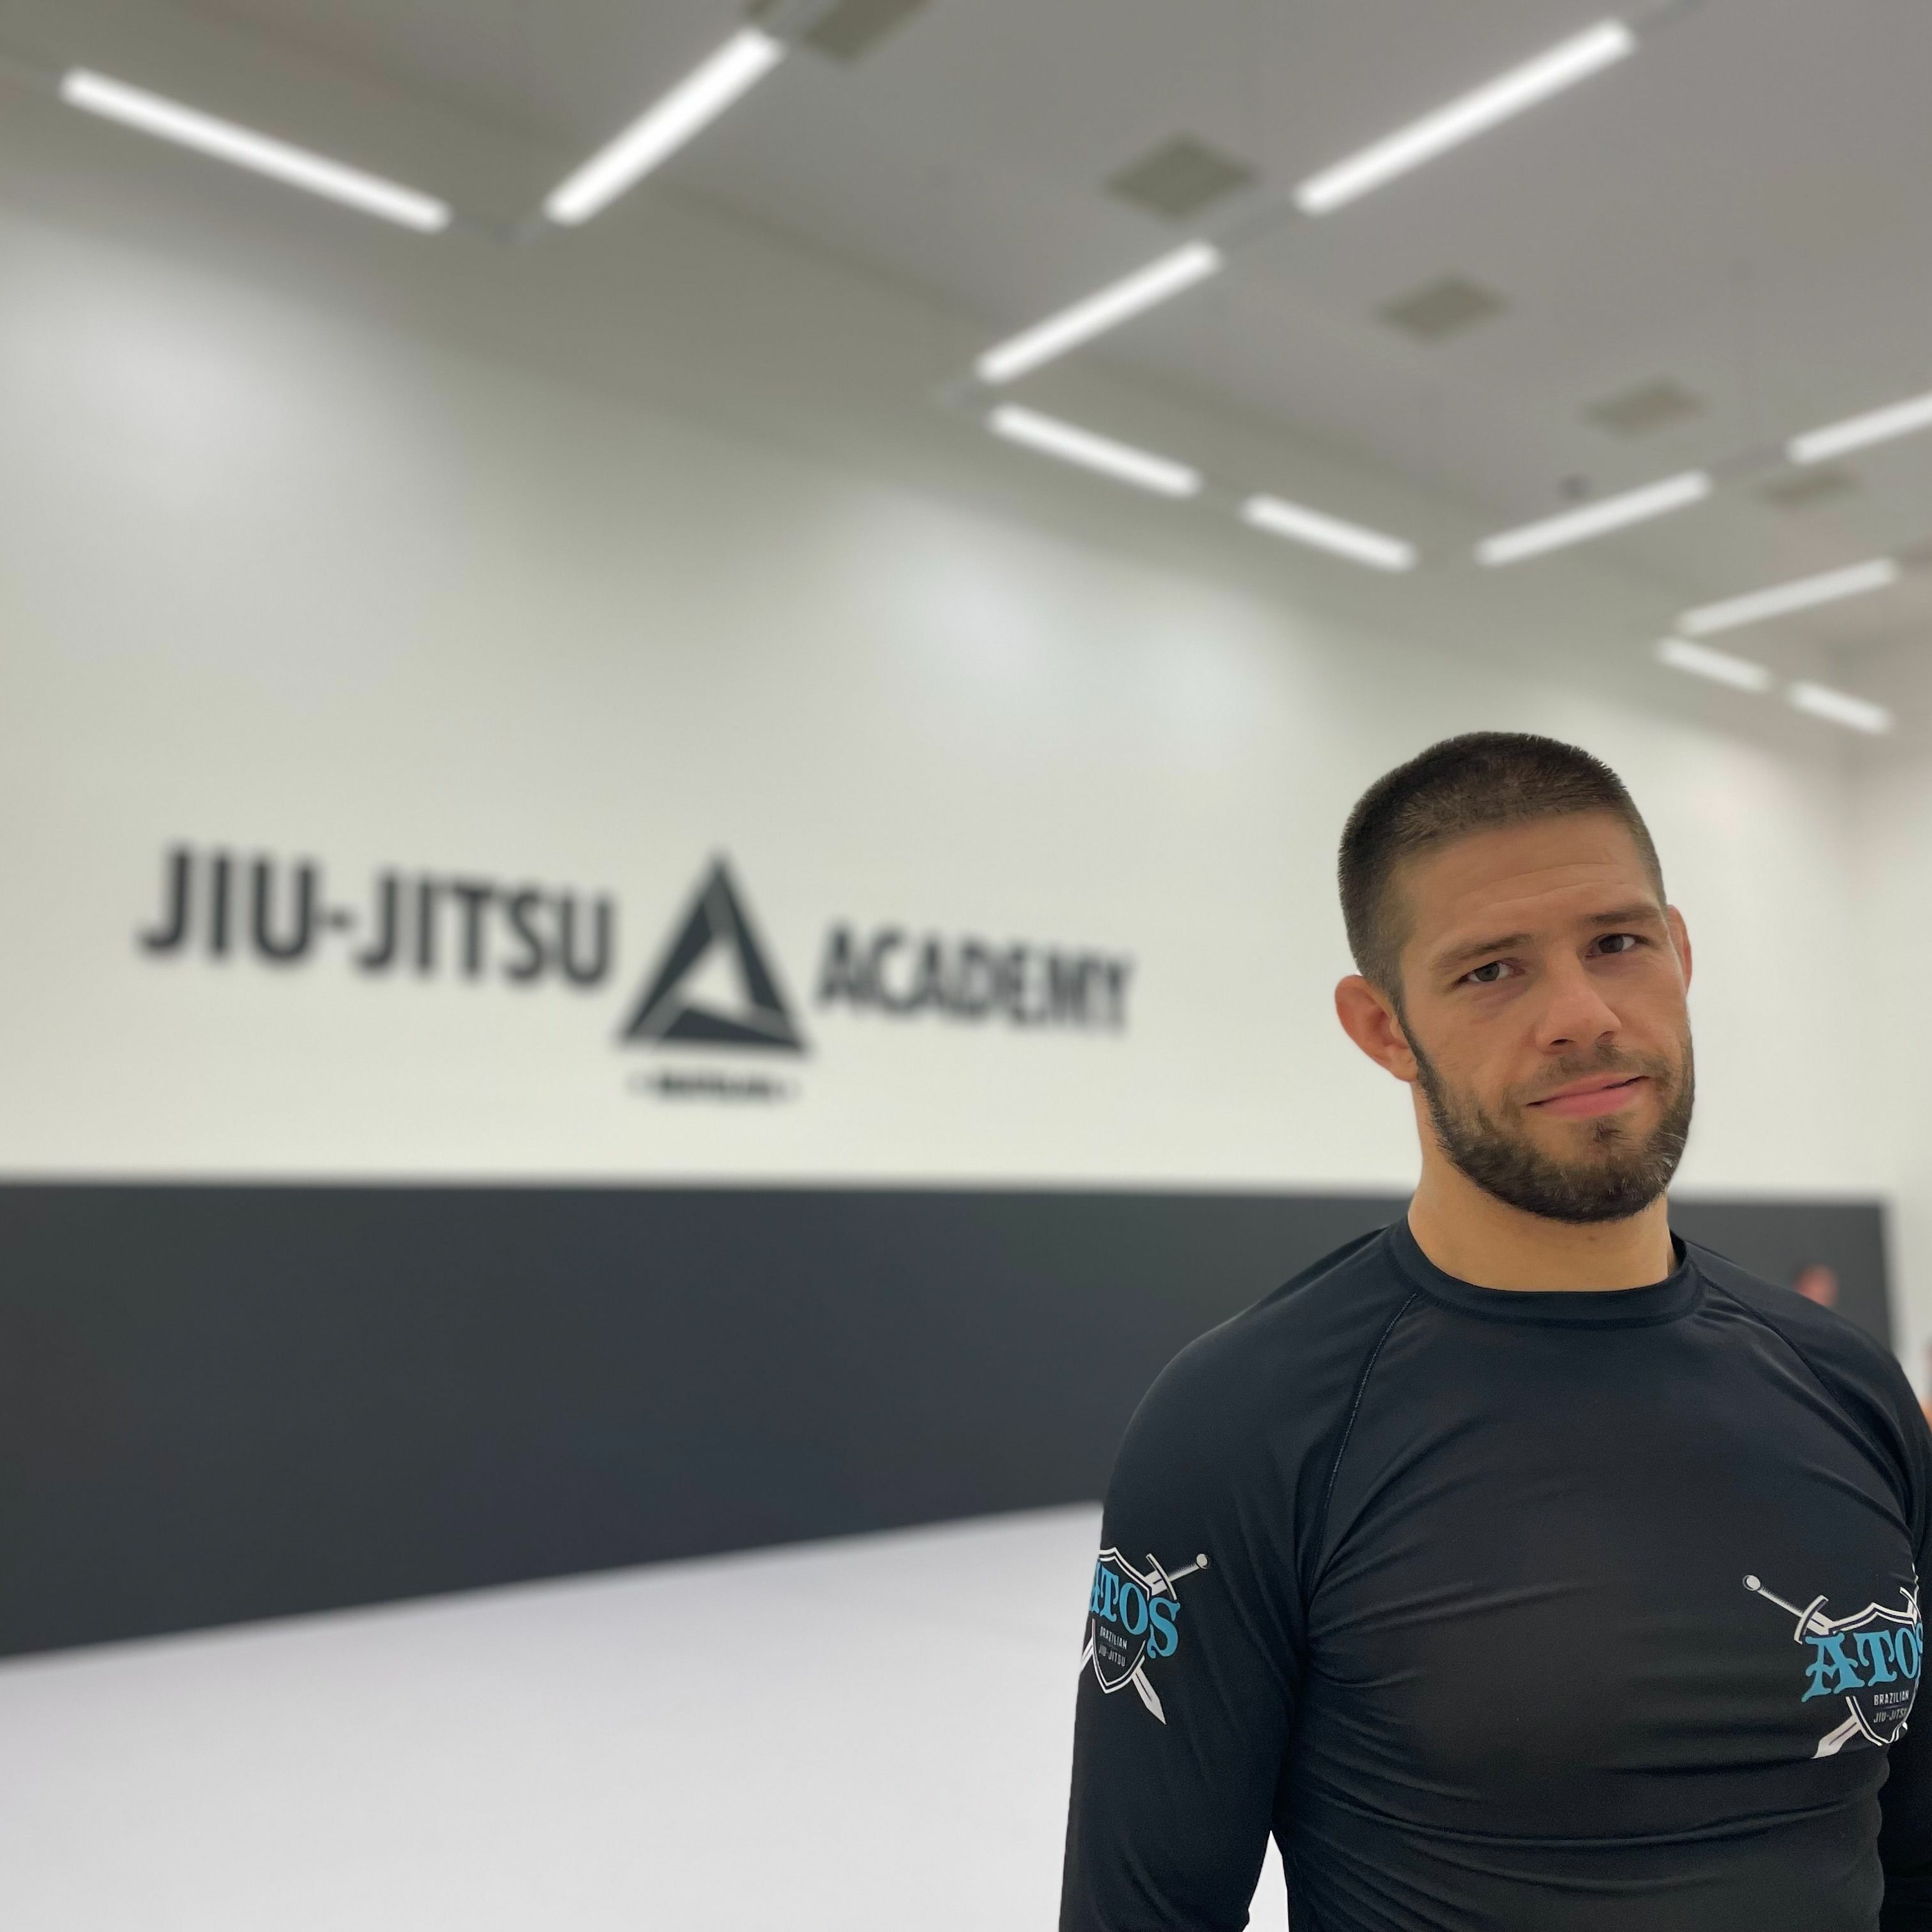 299. Podcast Mužom.sk: Michal Kukumberg (Jiu-jitsu Academy Bratislava)